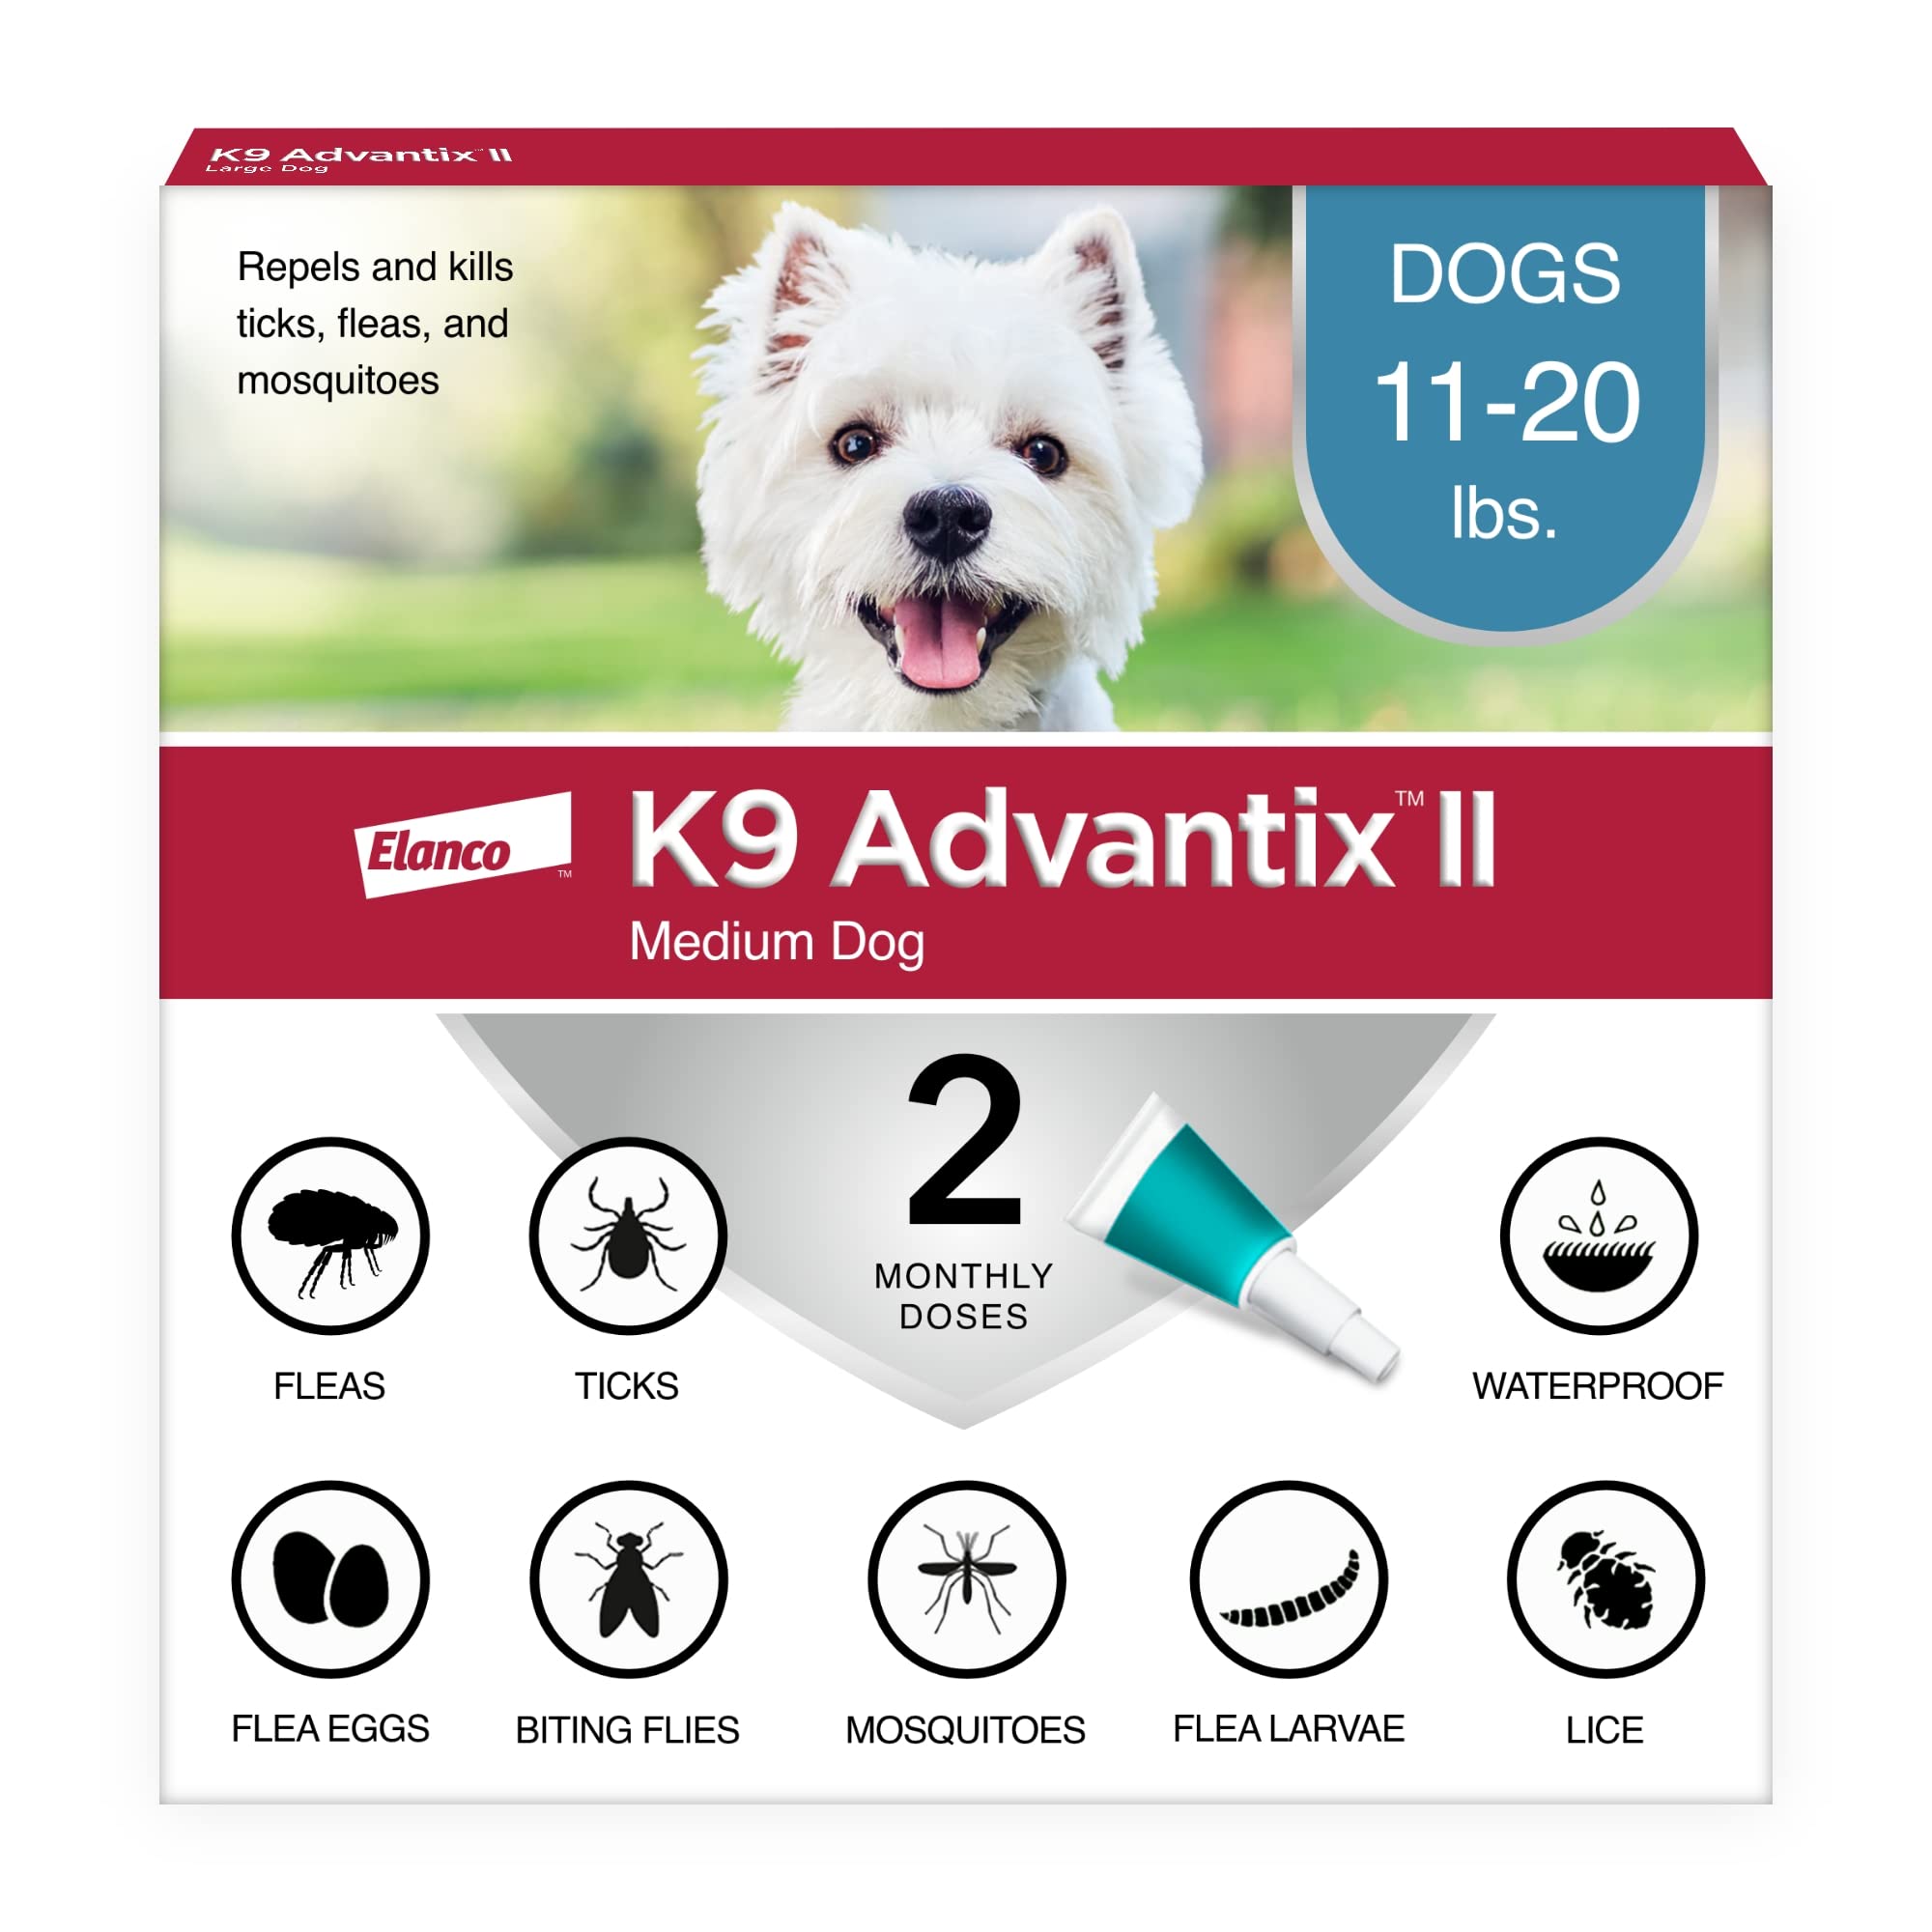 K9 Advantix II Medium Dog (11-20 lbs)  Flea, Tick & Mosquito Treatment 2-Mo Supply - 14.98 + Free Shipping $14.98